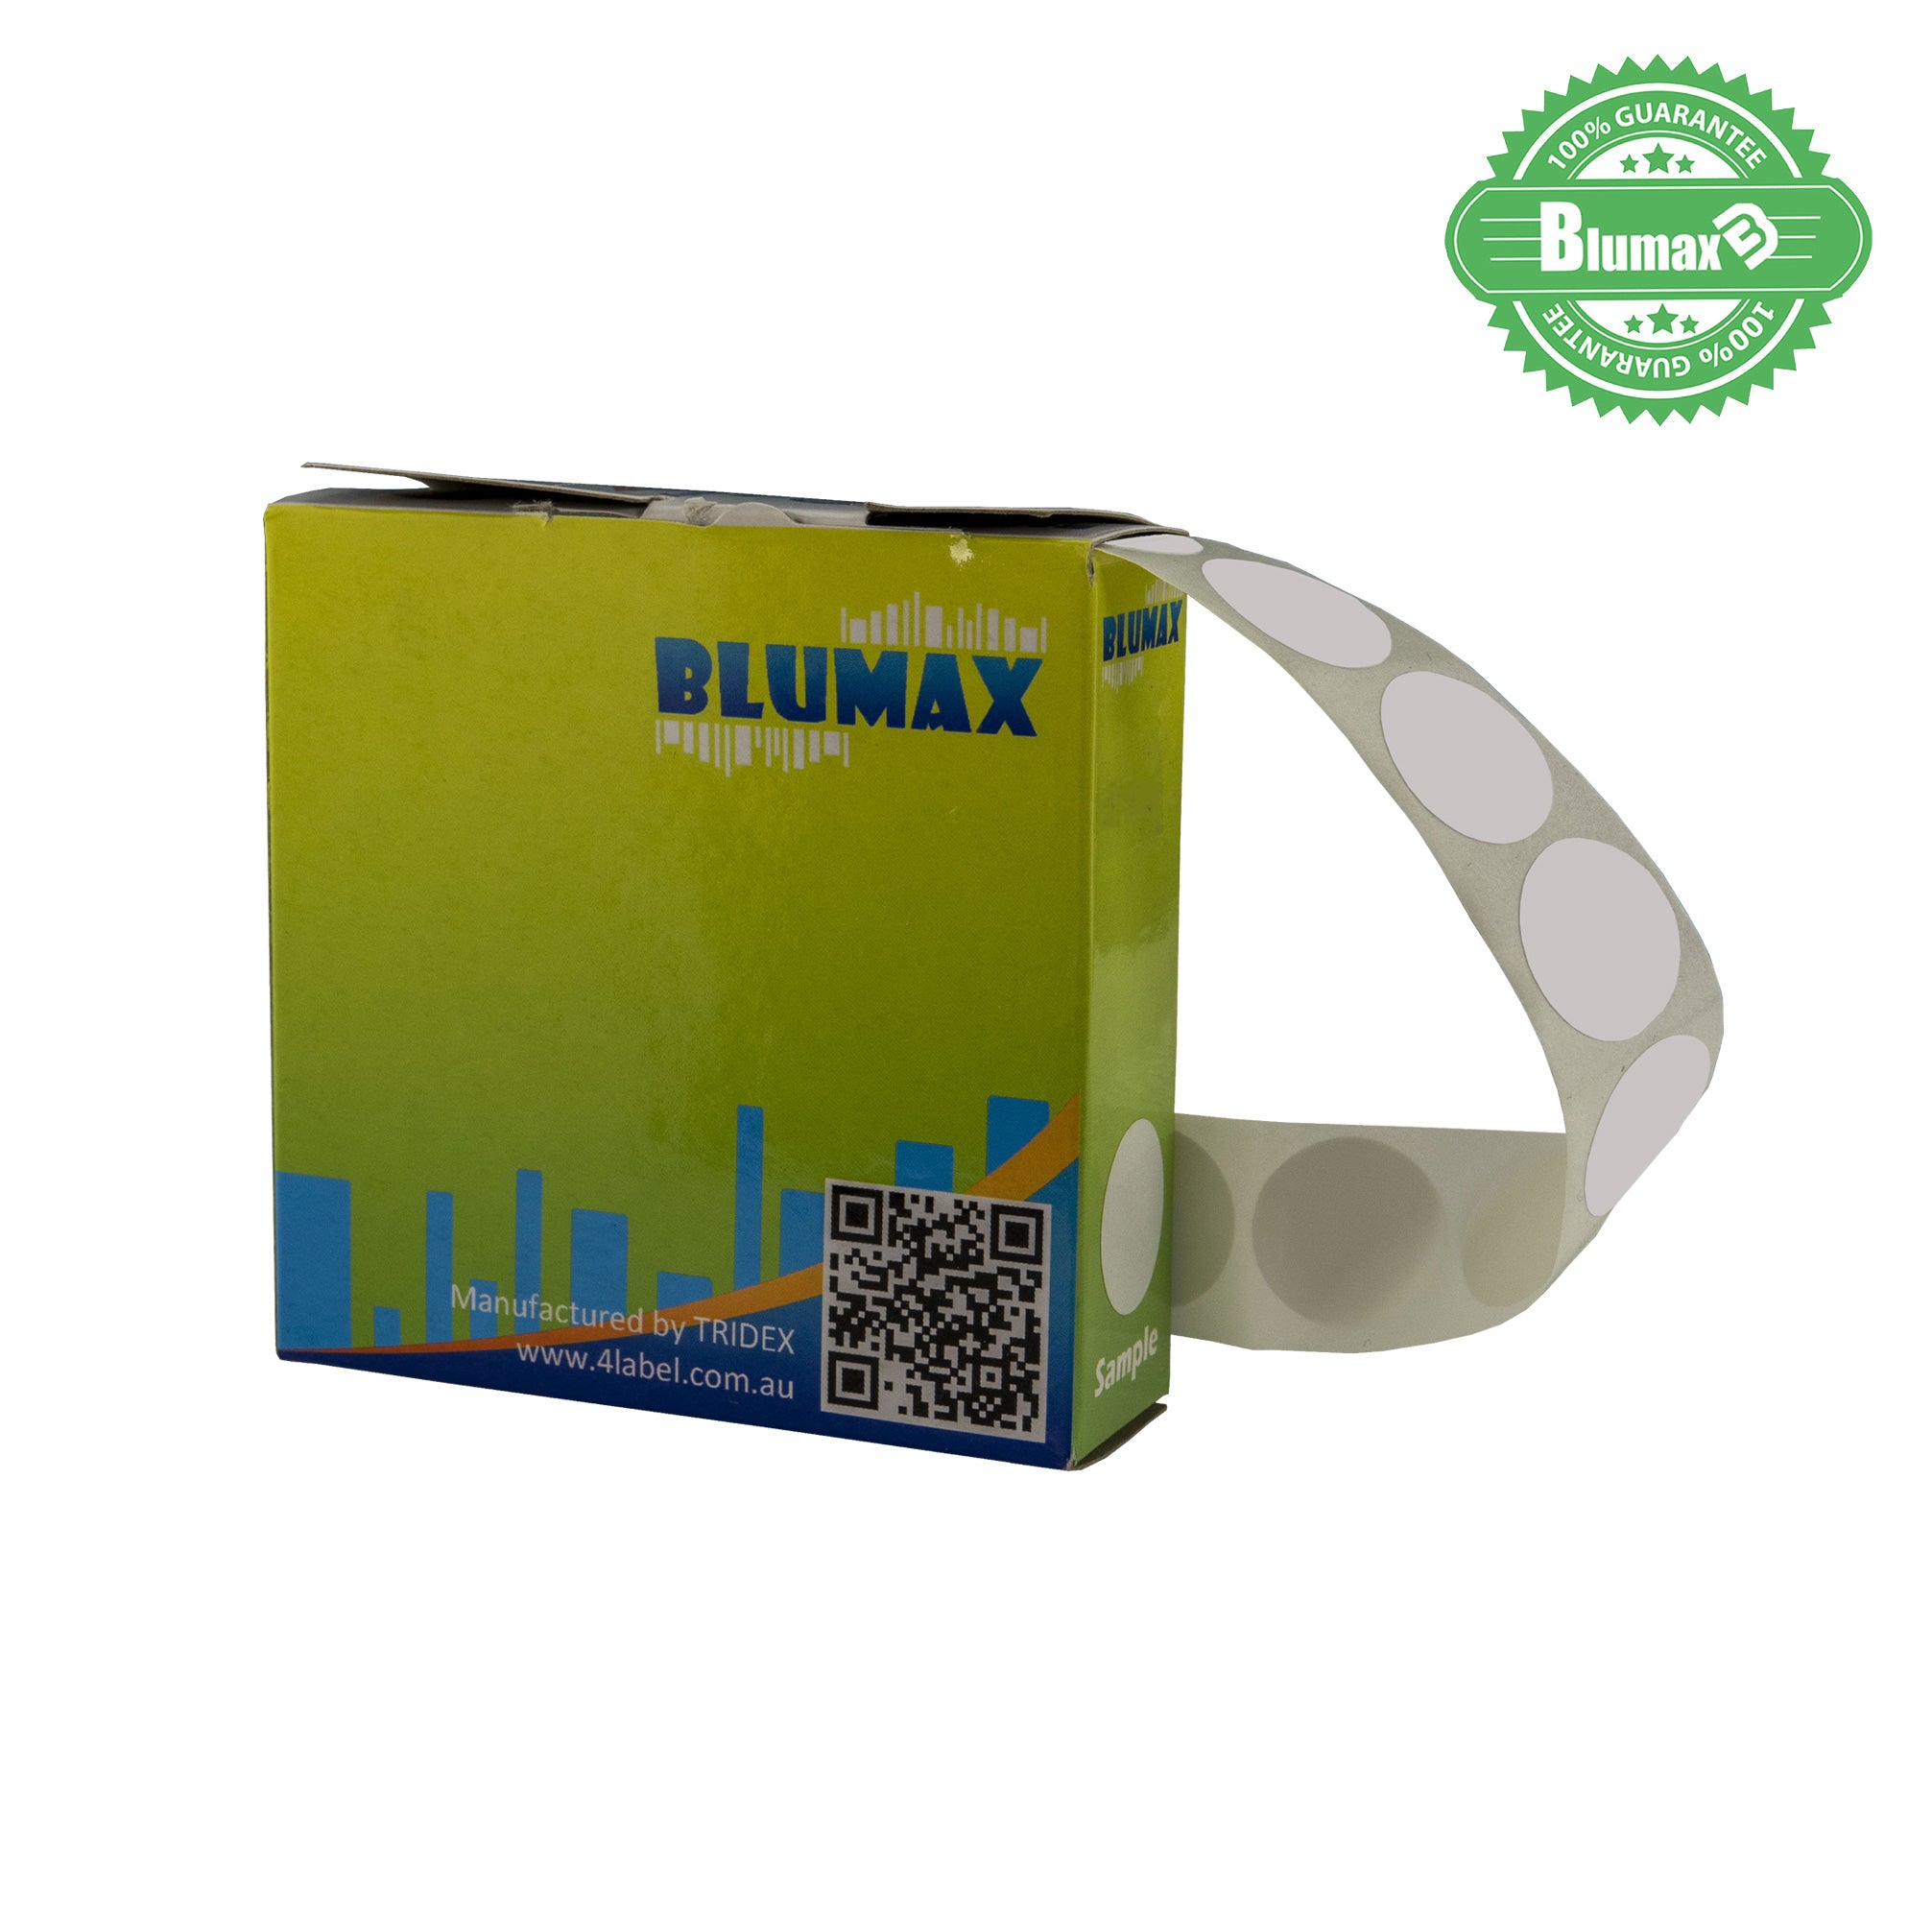 Blumax Self Dispenser Round (19MM) White Label Dots